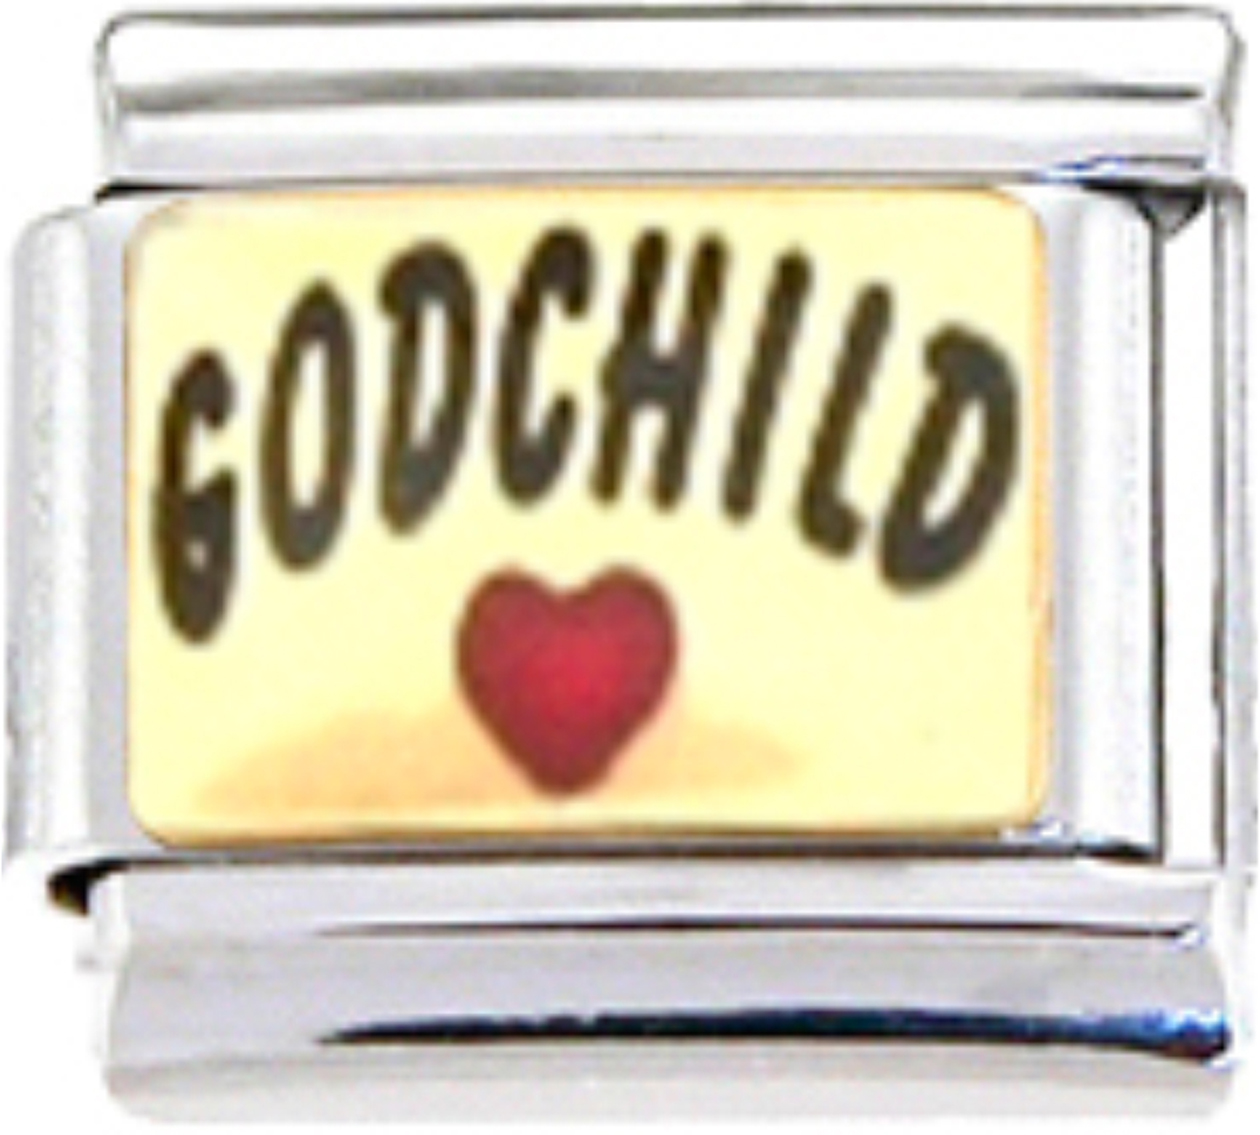 RE038-Godchild